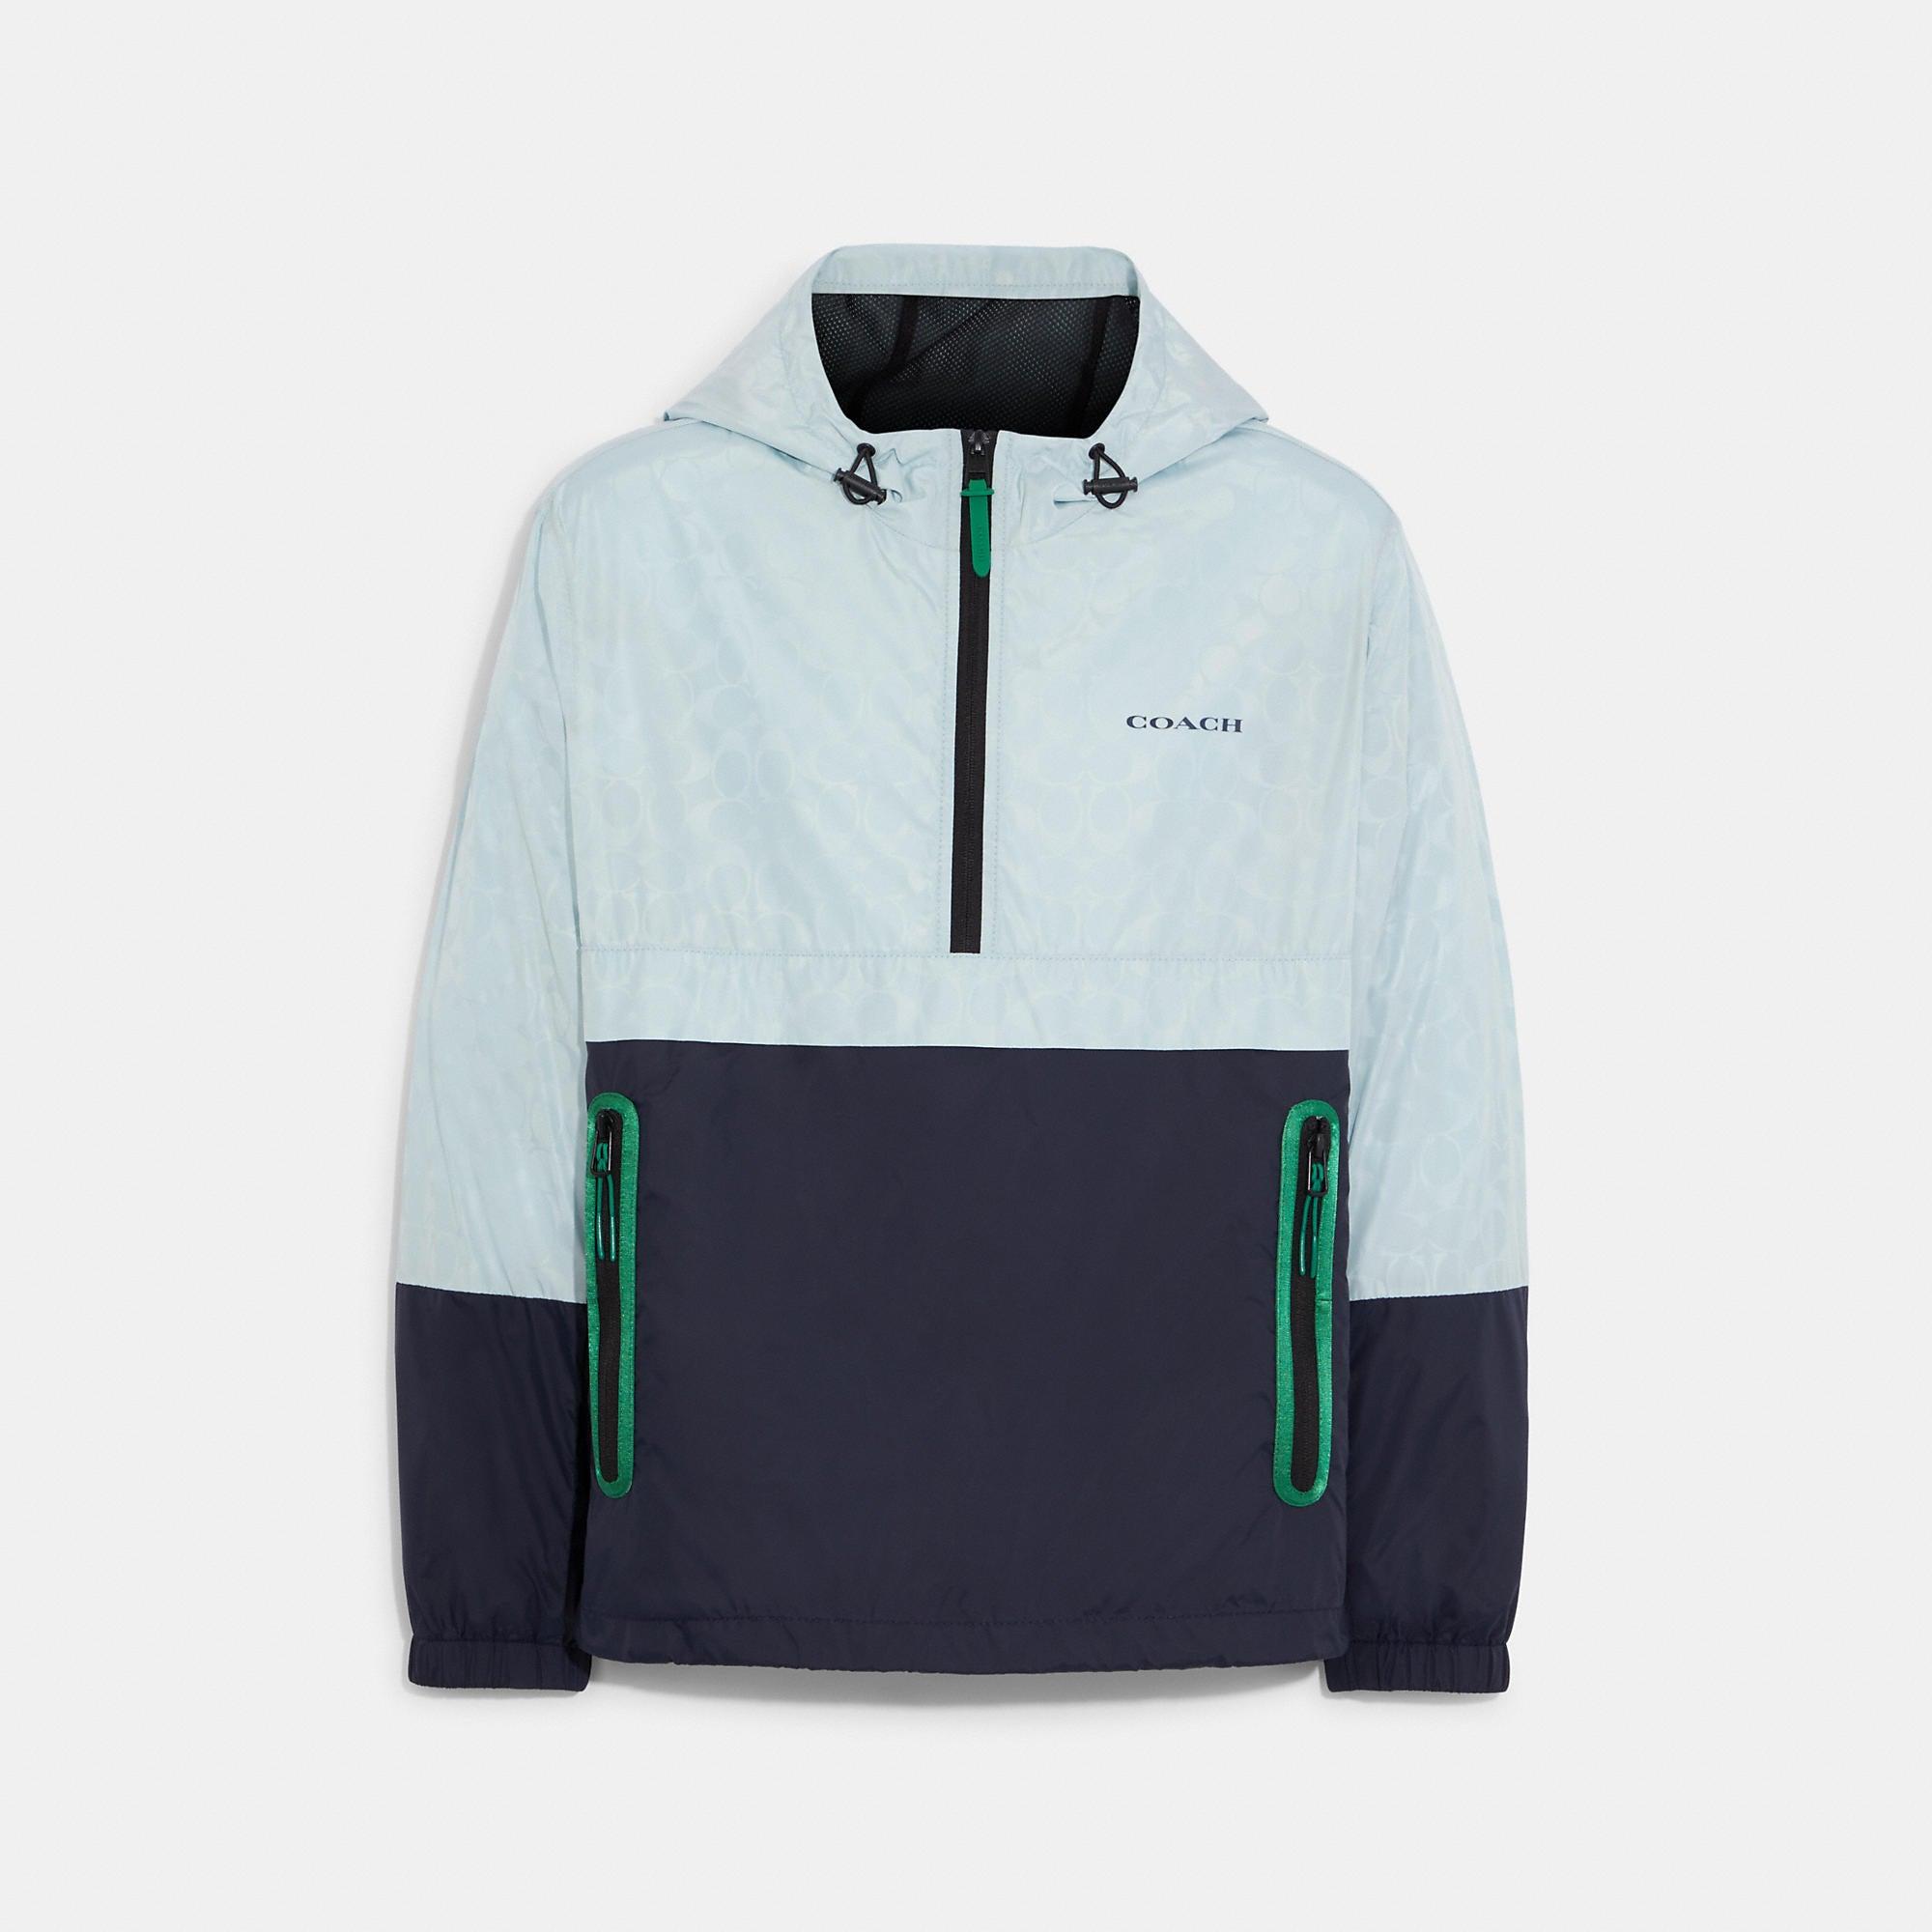 Coach Outlet Signature Denim Hooded Zip Up Jacket - Blue - XLarge